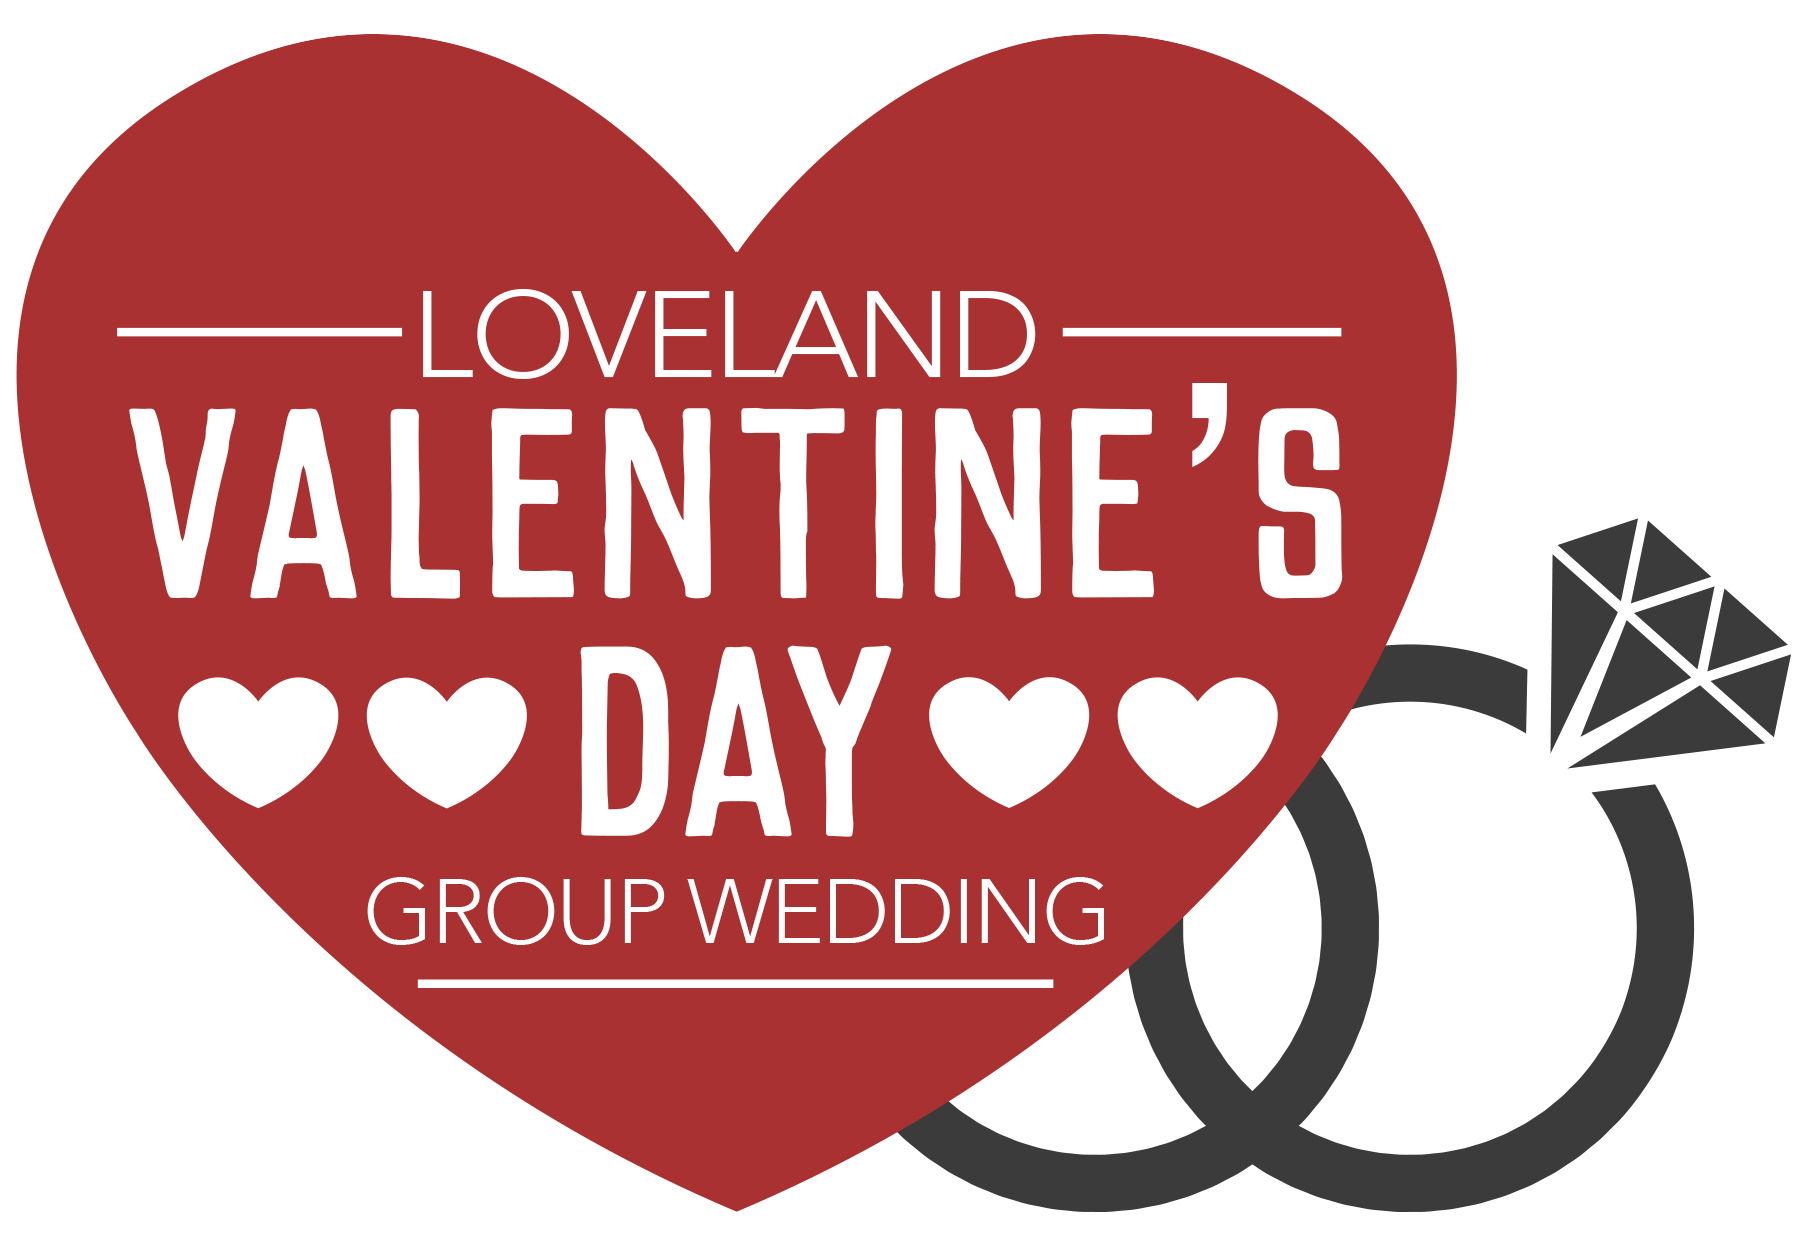 Loveland’s Annual Valentine’s Day Group Wedding